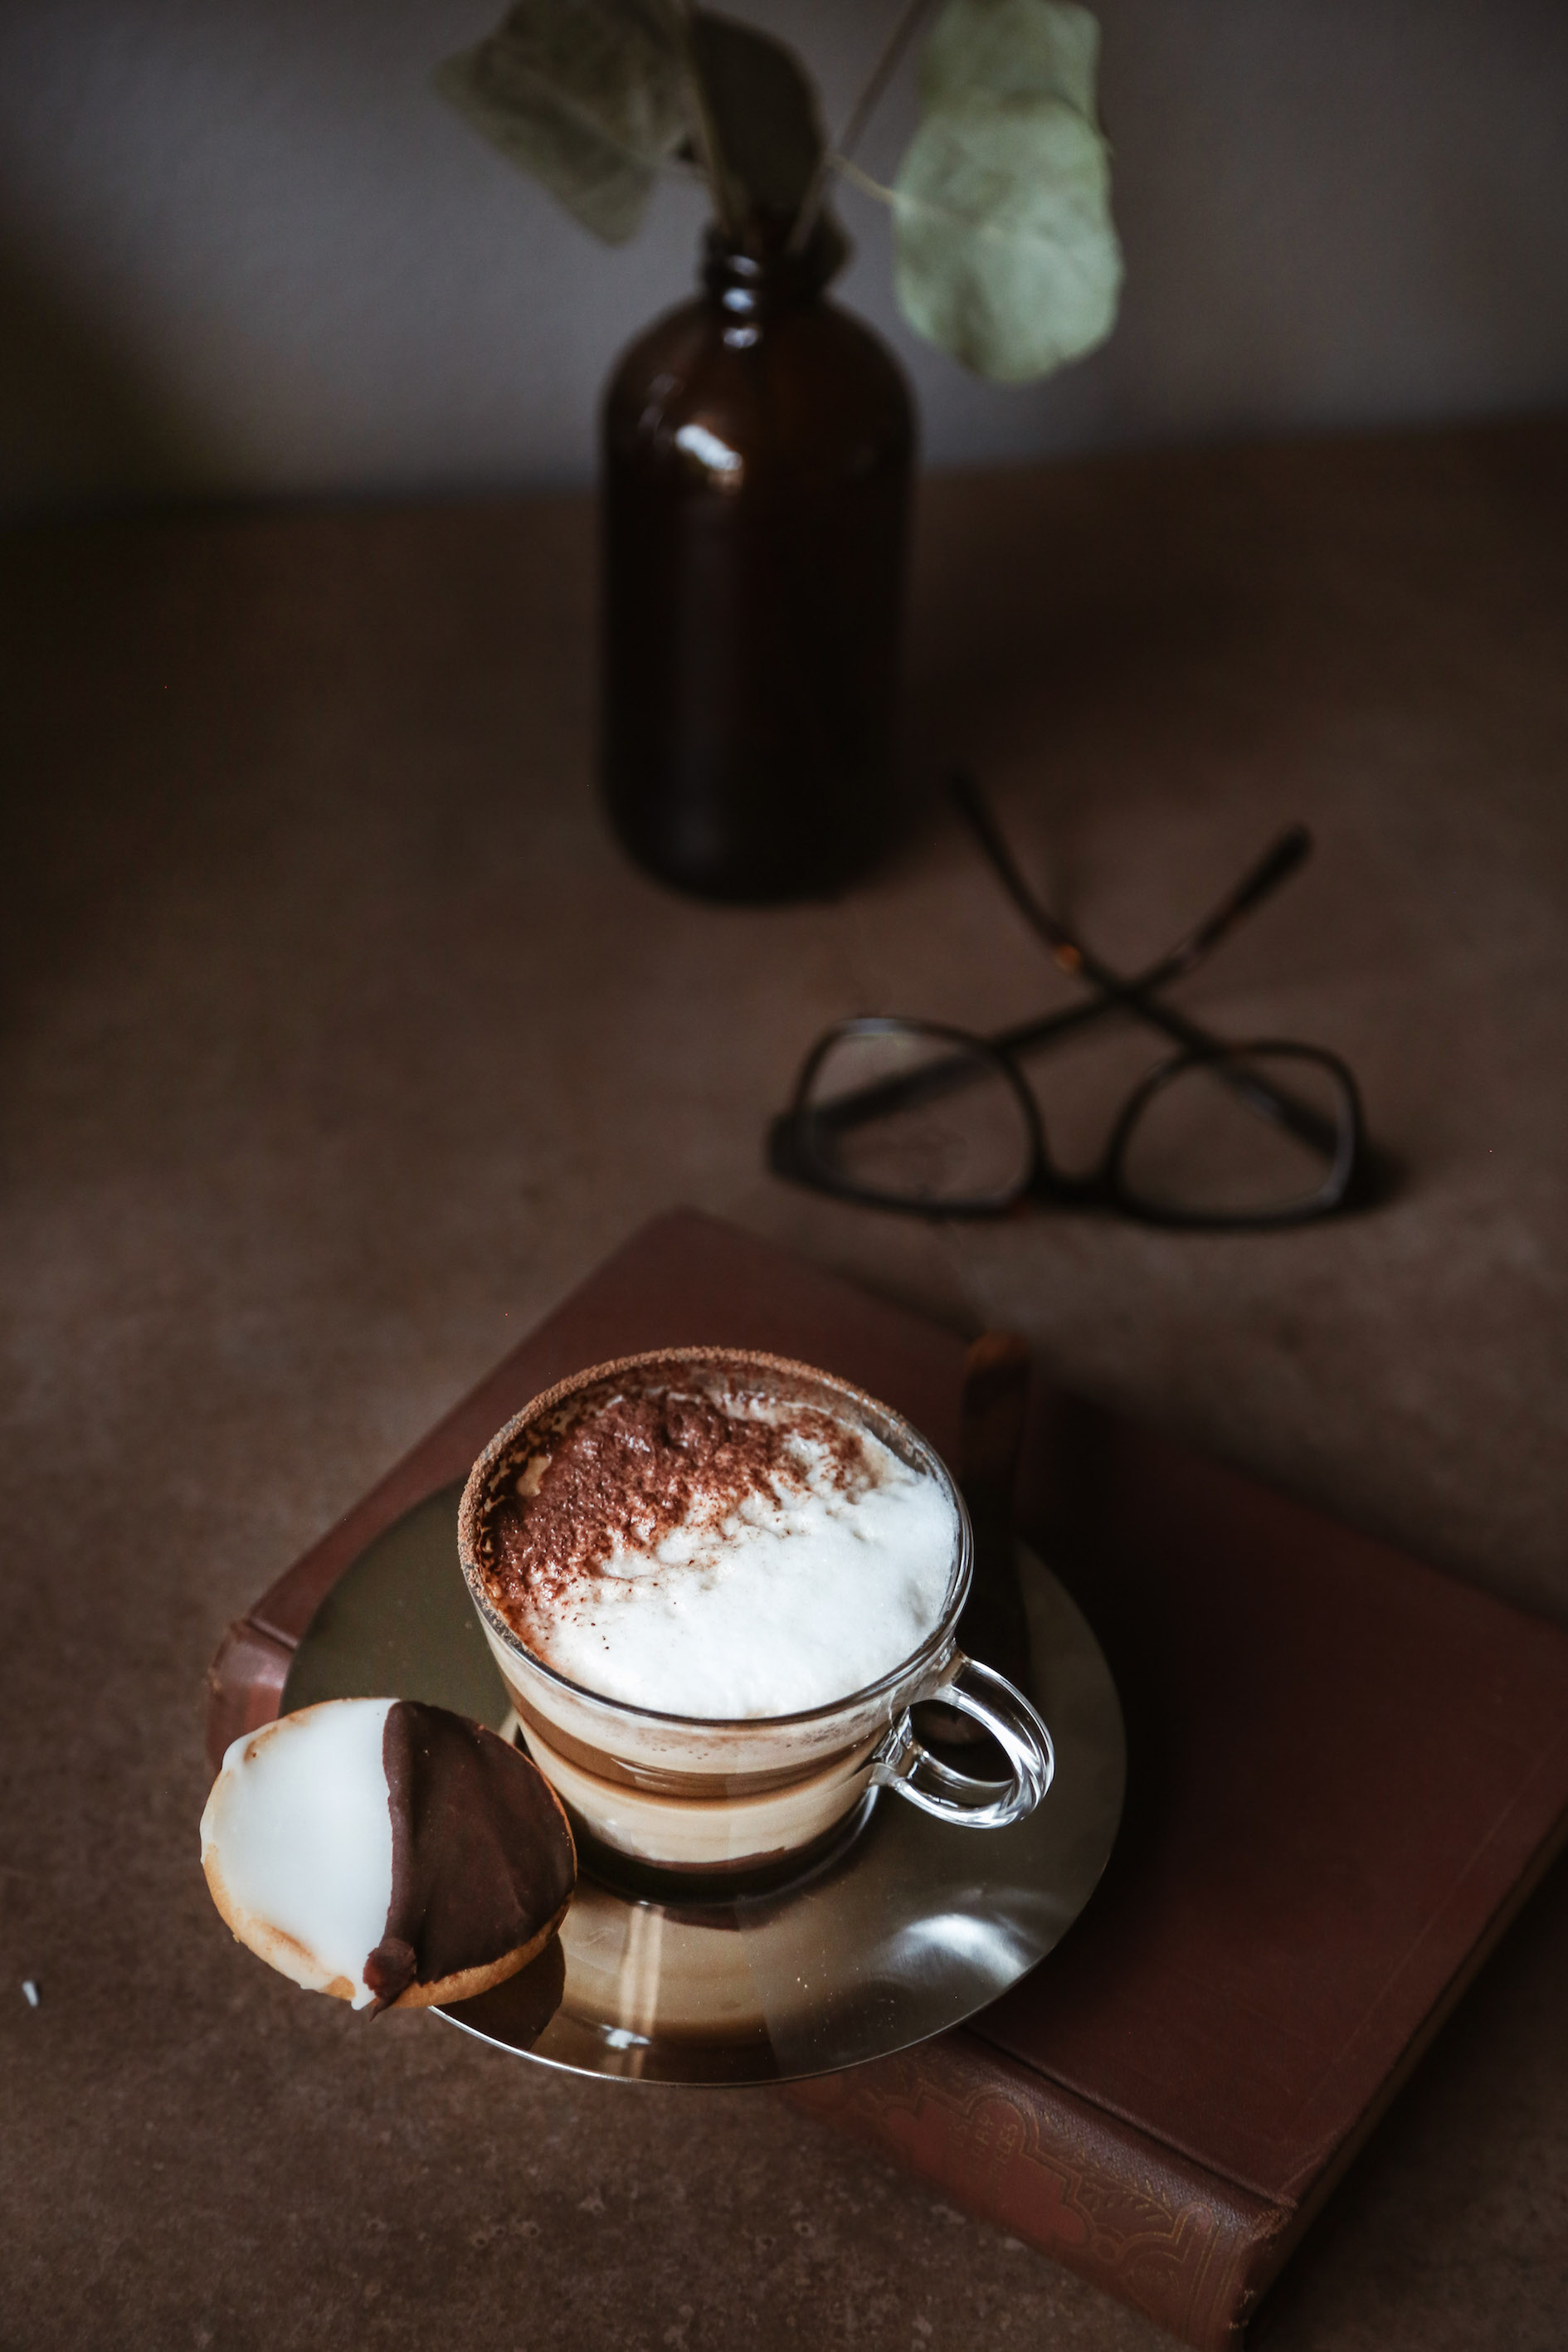 https://images.squarespace-cdn.com/content/v1/58e2595c3e00be0ae51453aa/1519341707774-D8NH9MC91QTVTRUJAGE9/Nespresso+Black+and+White+Cookie+Latte+Recipe12.jpg